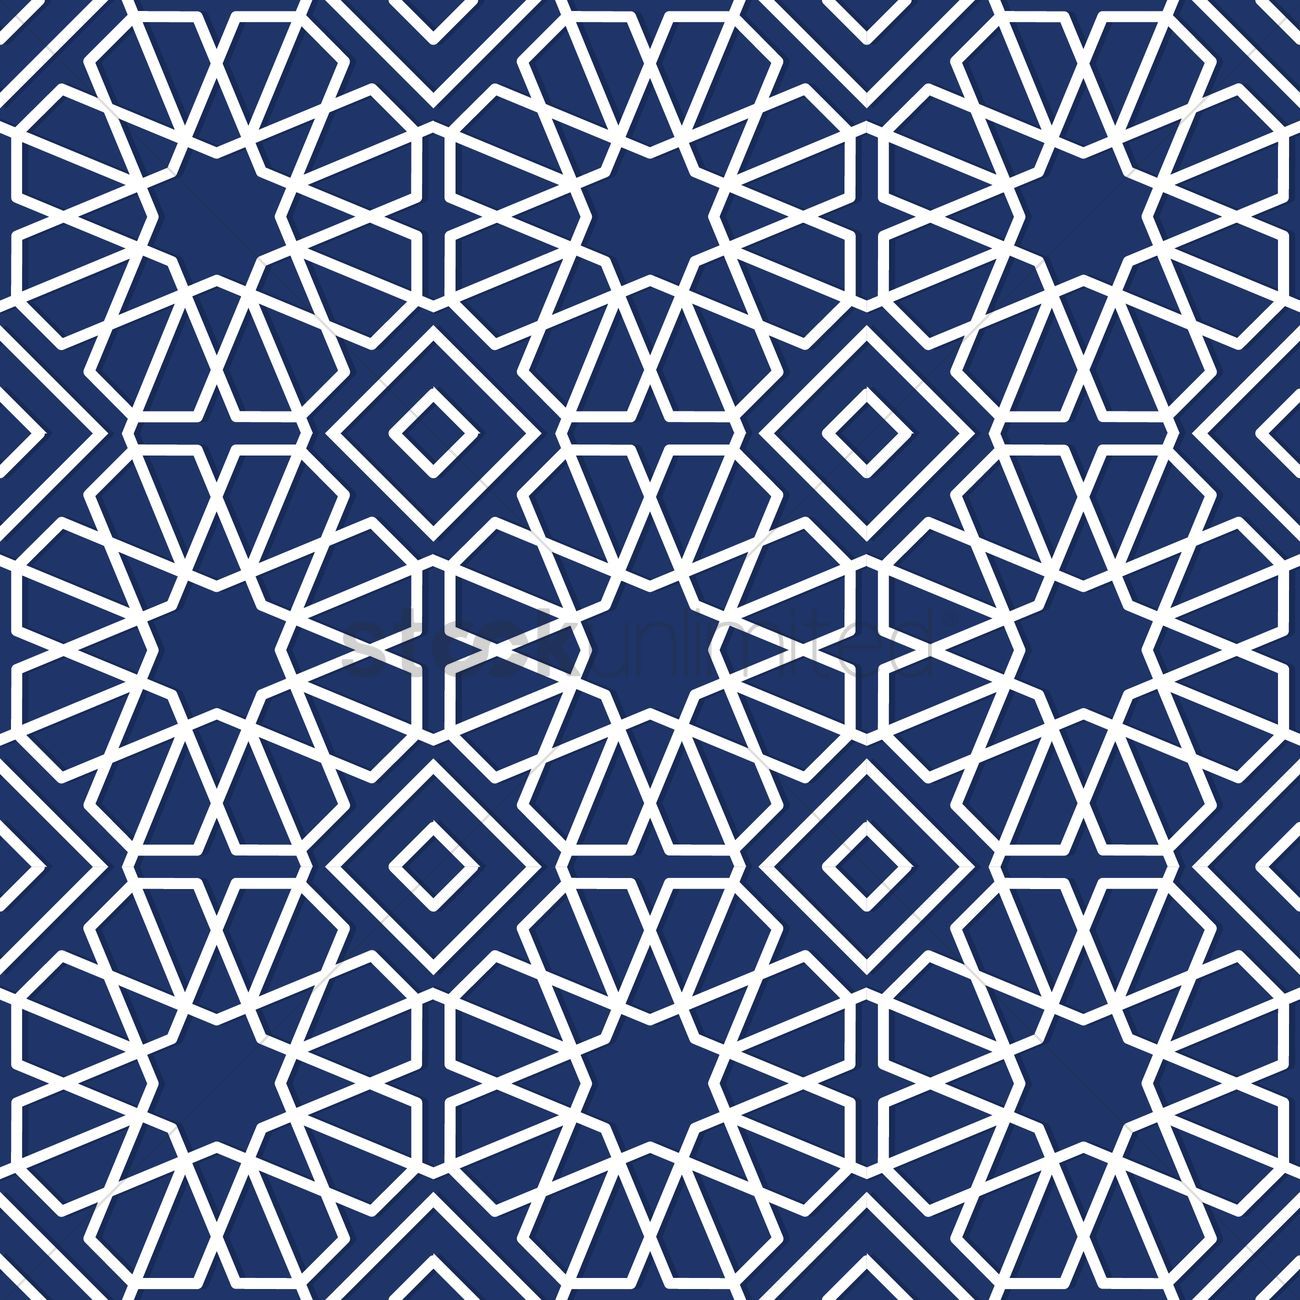 Islamic geometric pattern design Vector Image